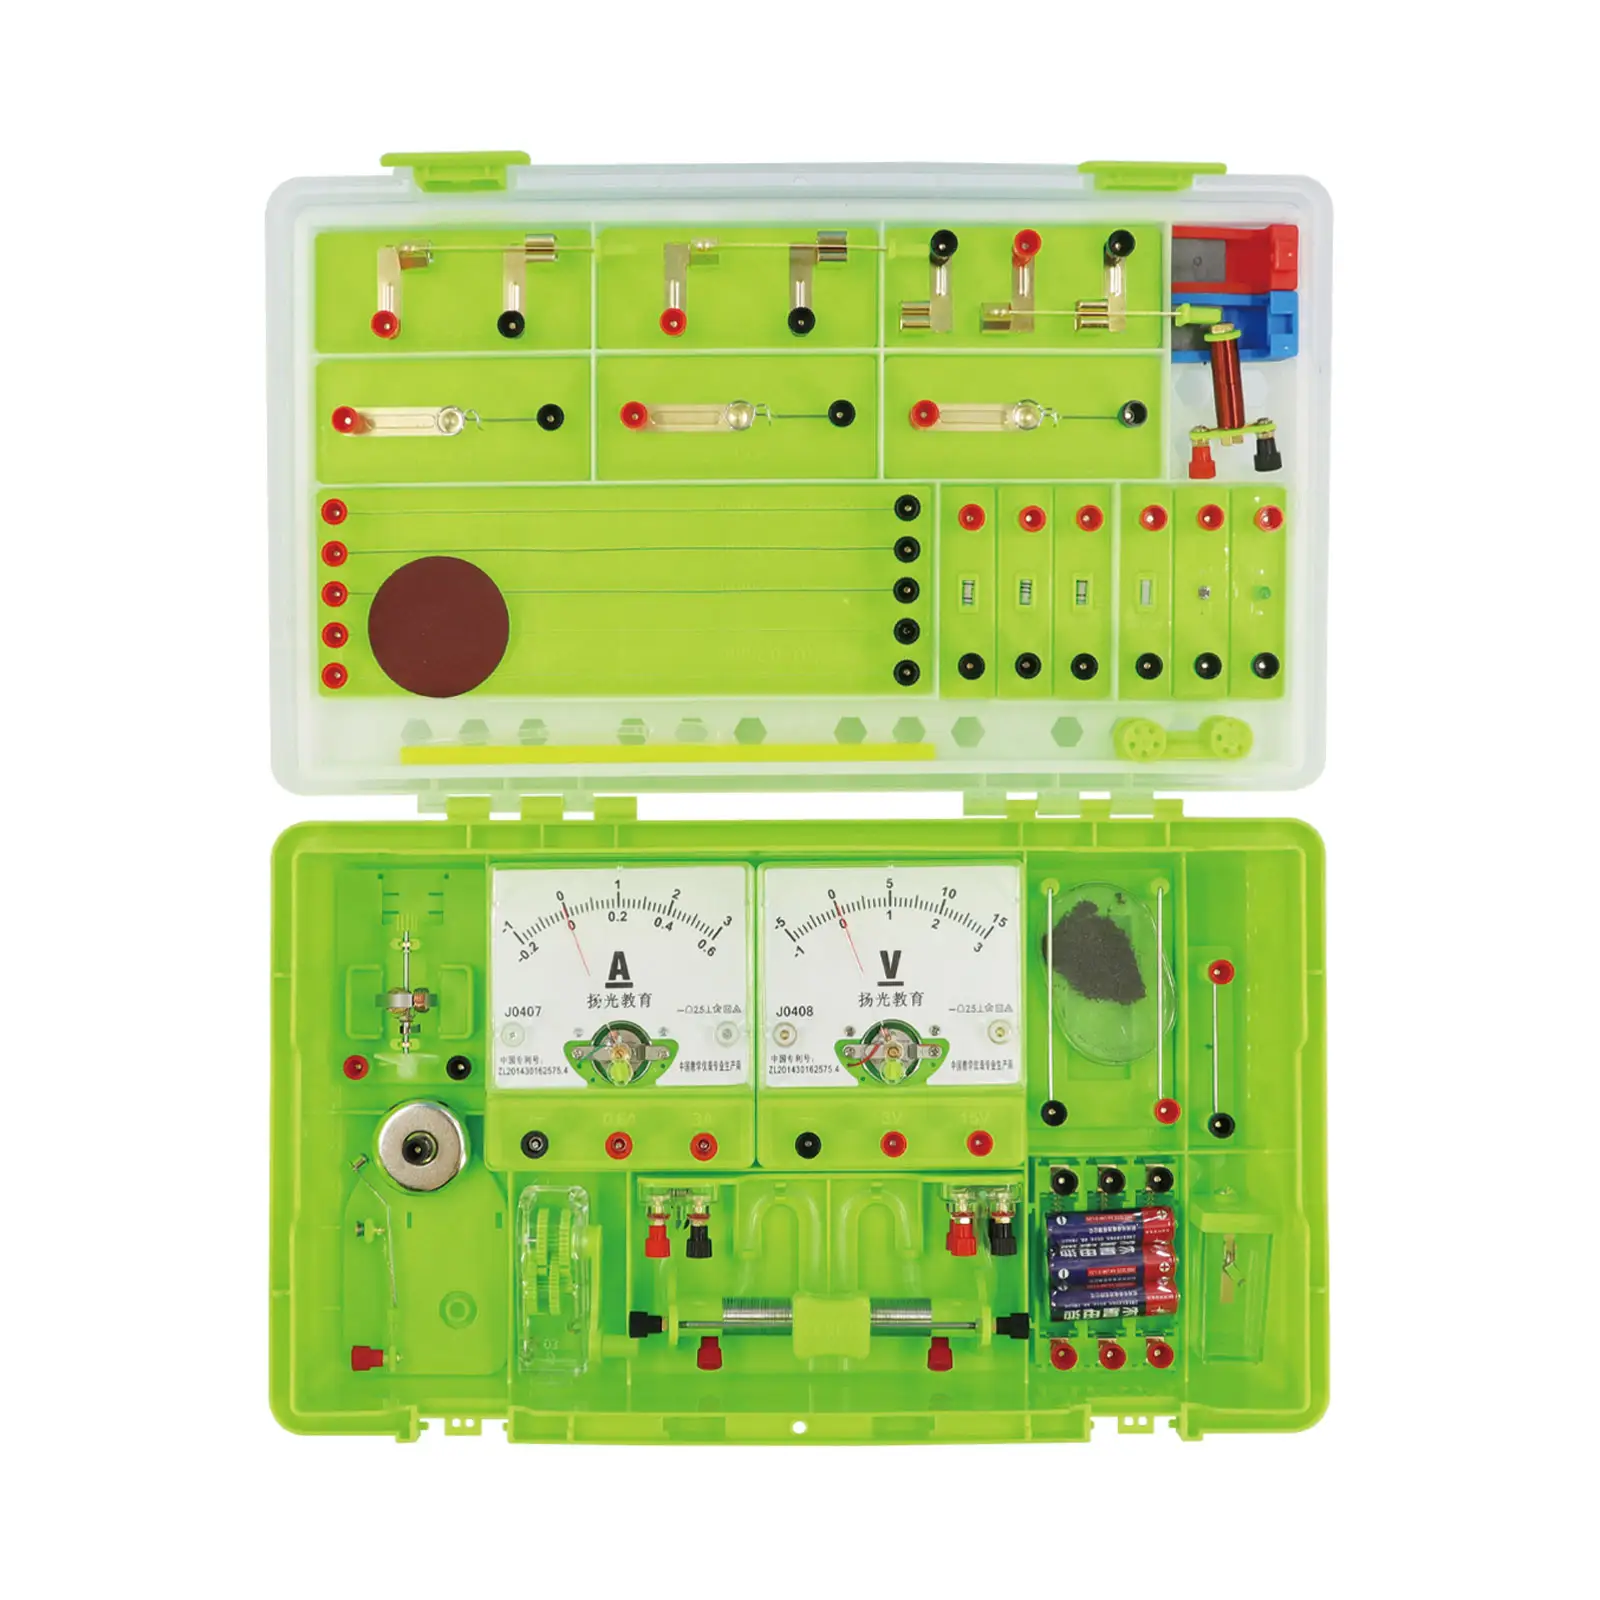 Kit de circuitos eletromagnéticos paralelos de alta qualidade, conjunto de estudo, experimento científico, kit educacional para escola, recursos de ensino